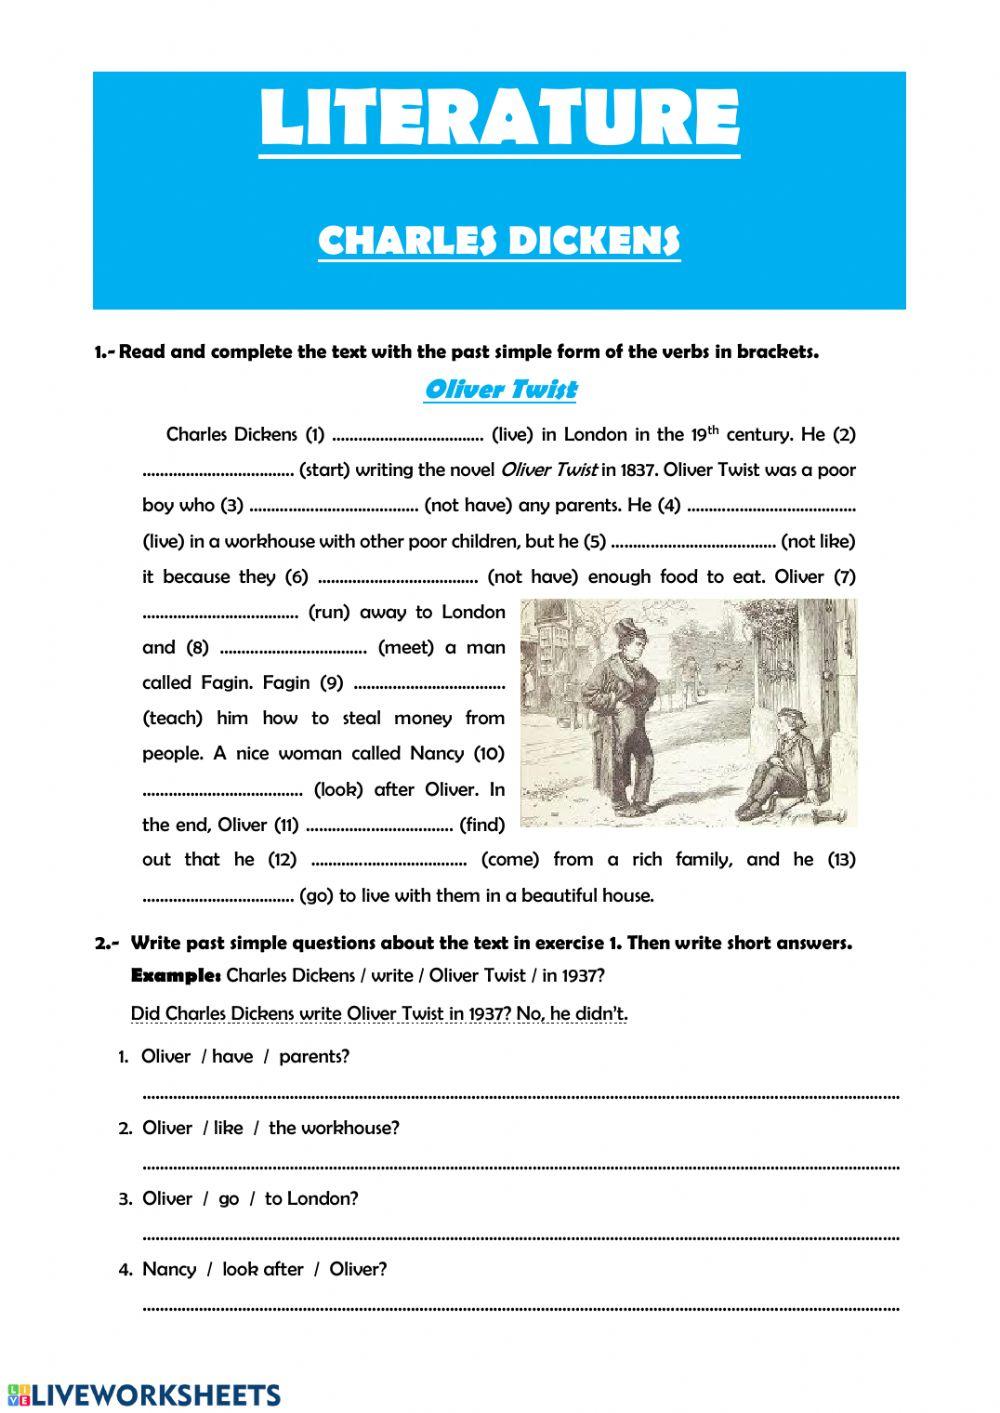 Literature - Charles Dickens - Past simple